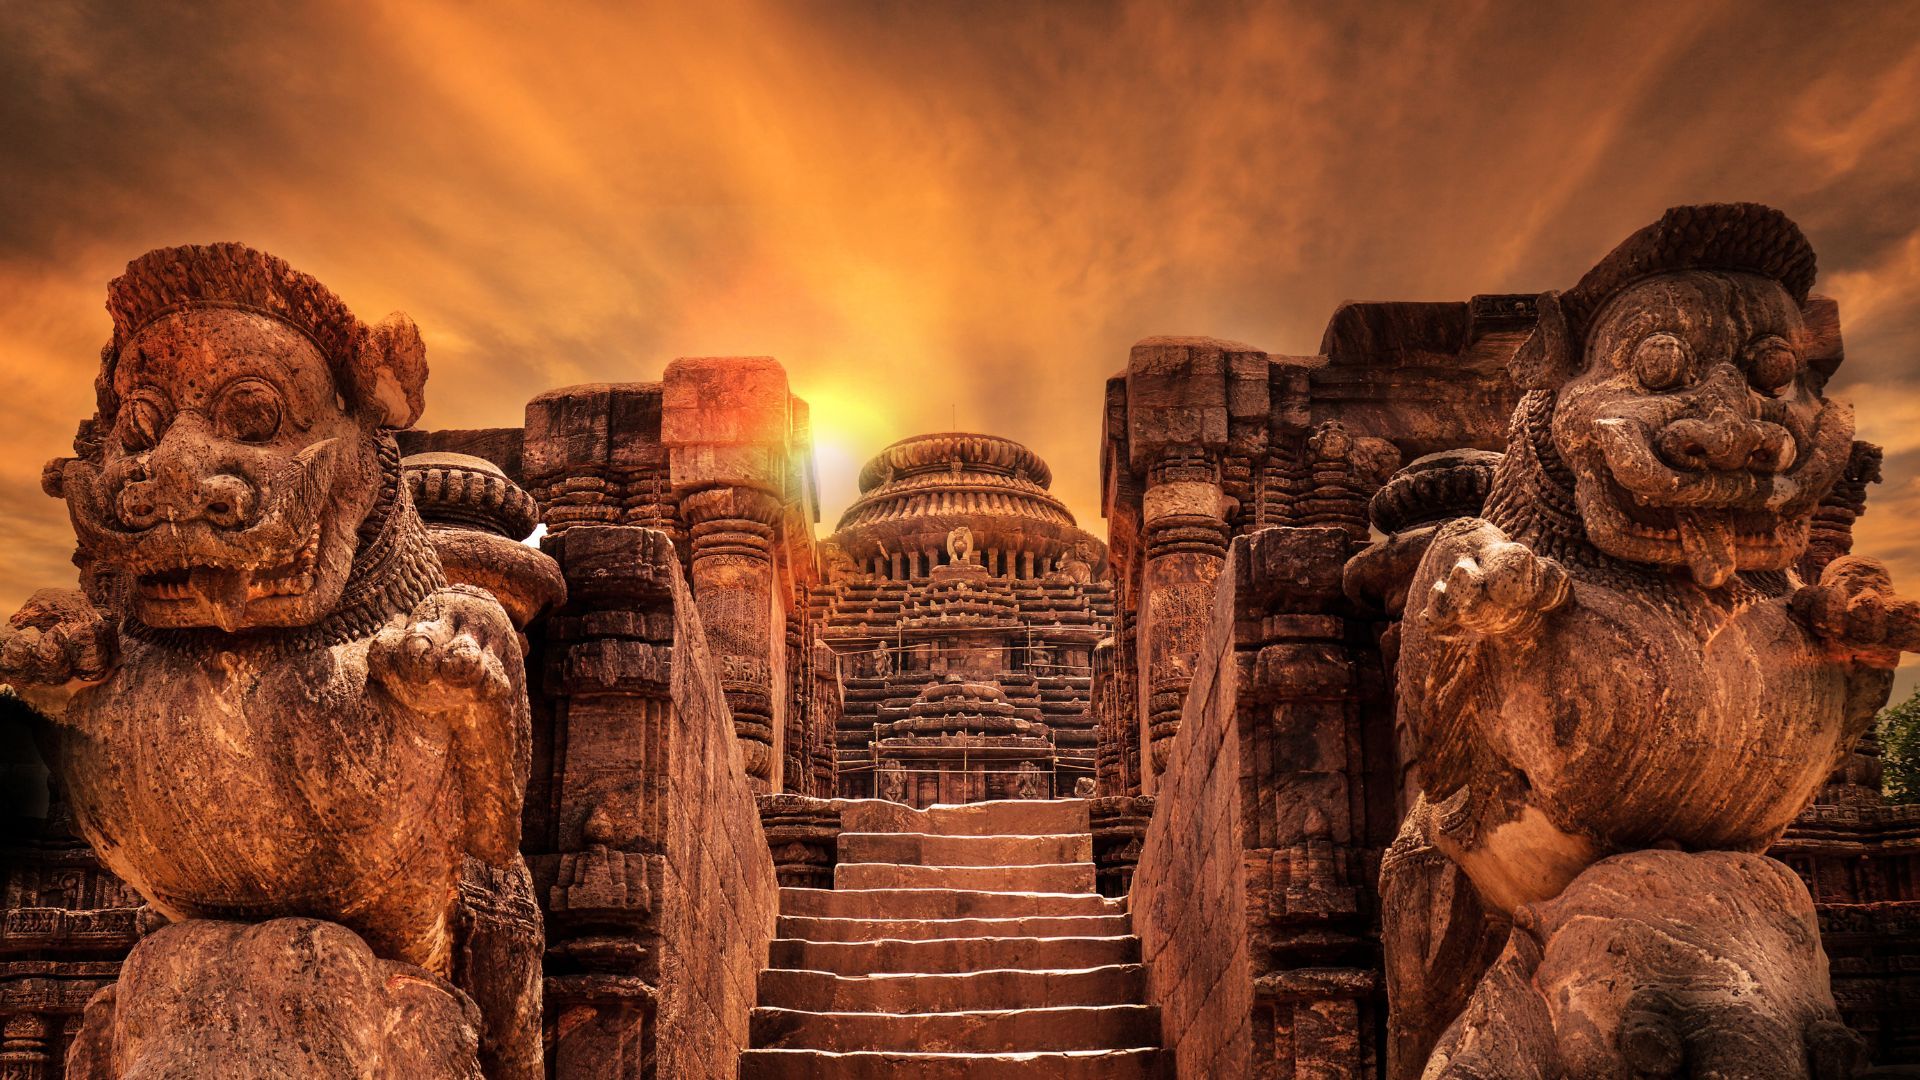 Konark Sun Temple In Odisha Unbelievable Facts About The Masterpiece